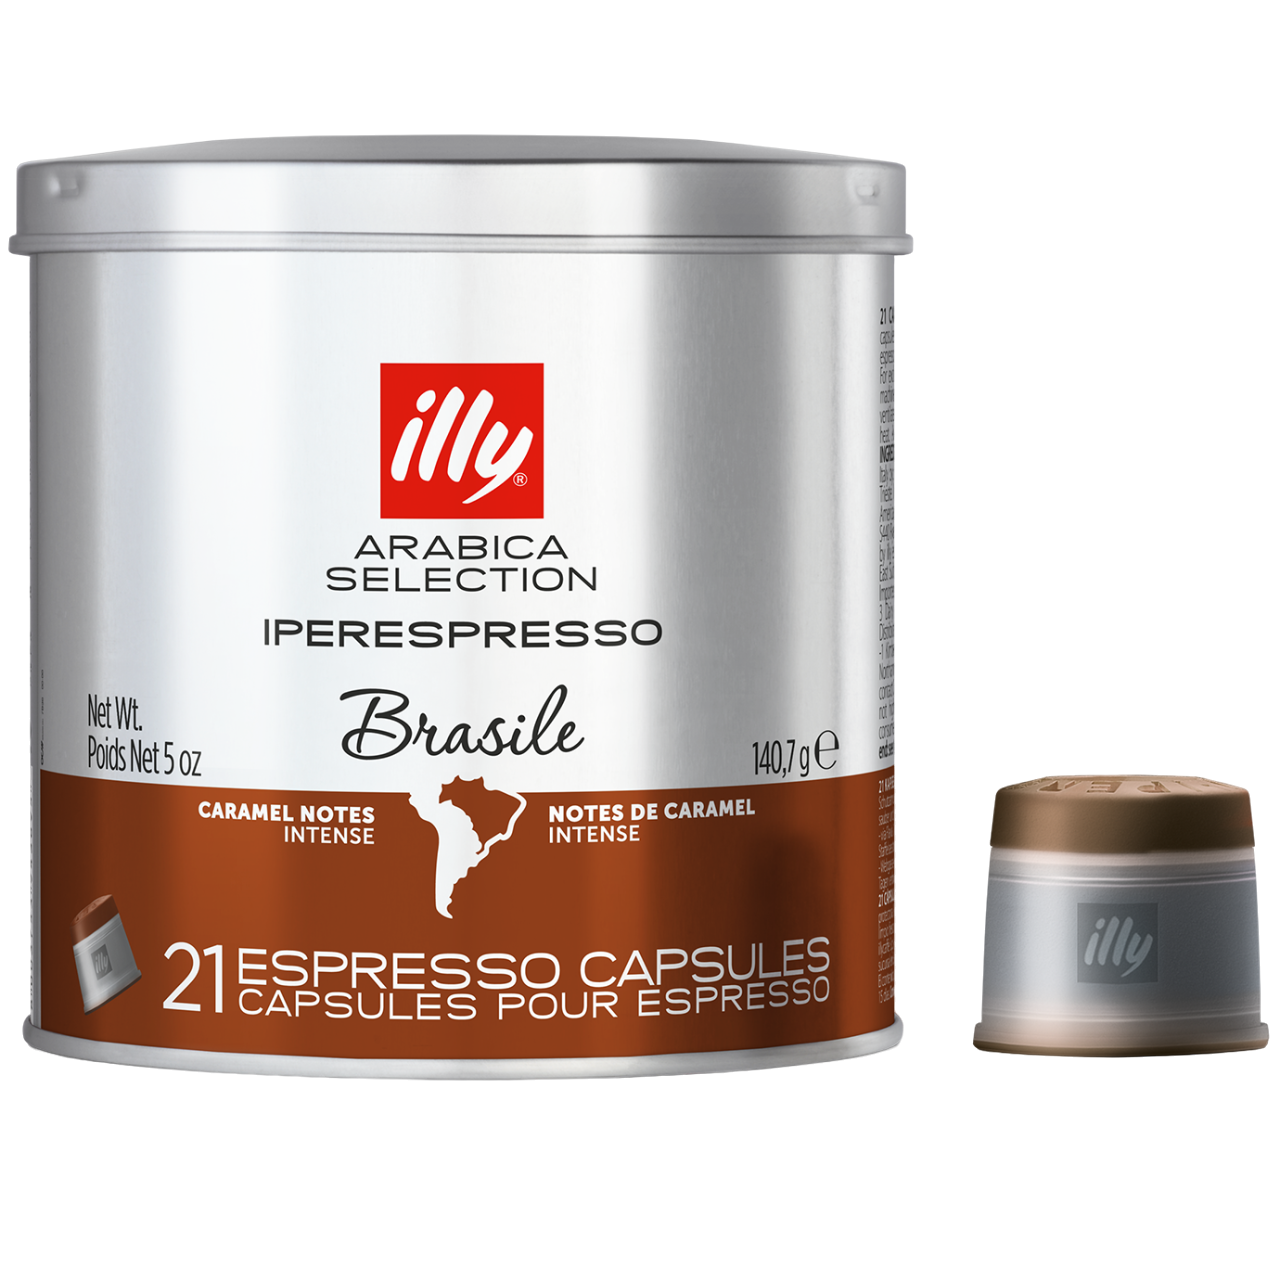 Кофе молотый Illy IperEspresso Monoarabica Brasile Espresso 21 капсула 140.7 г - фото 1